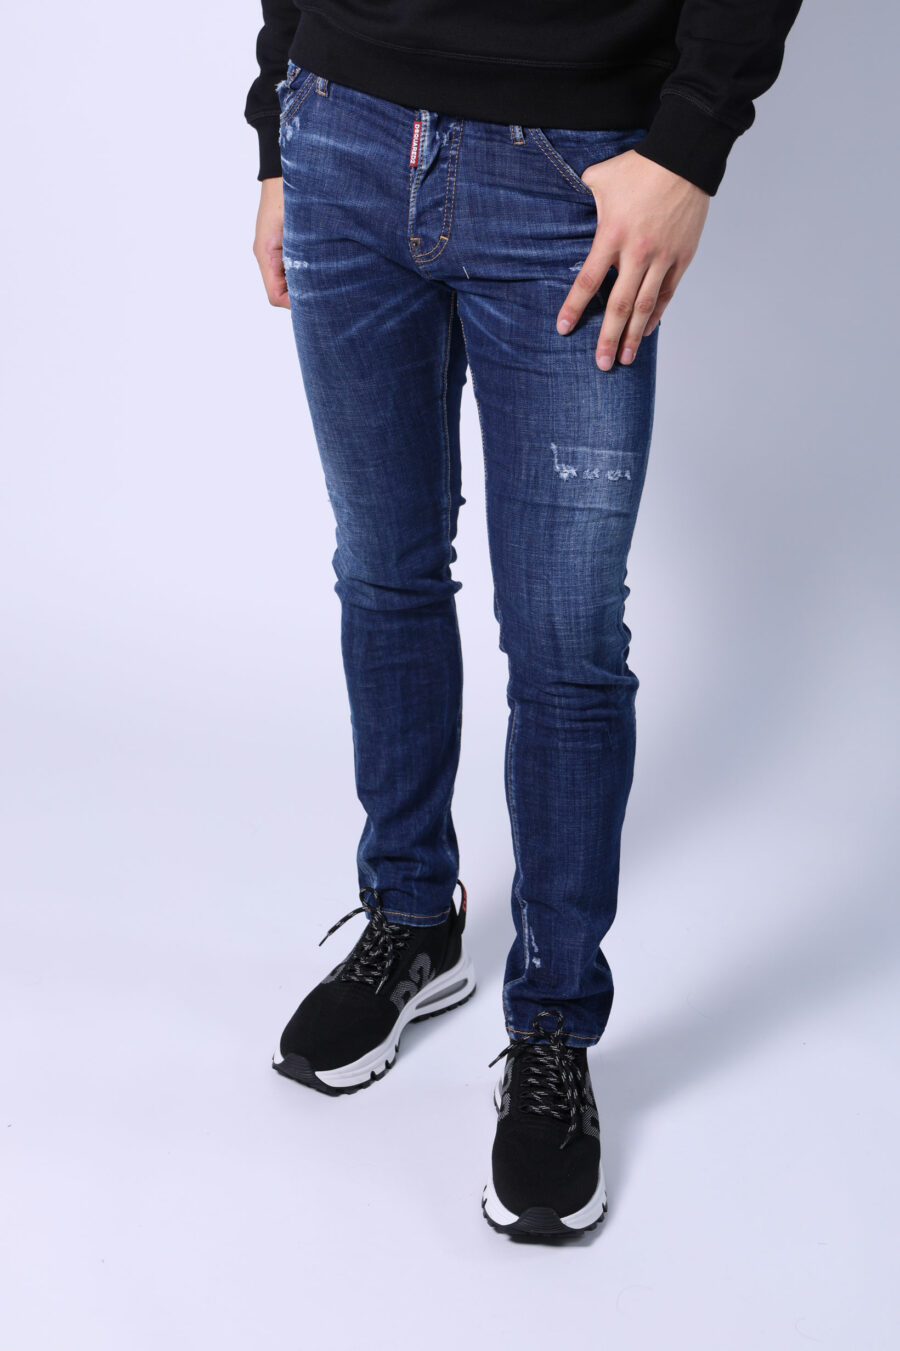 Halbgetragene blaue "Skater-Jeans" Jeans - Ohne Titel Katalog 05554